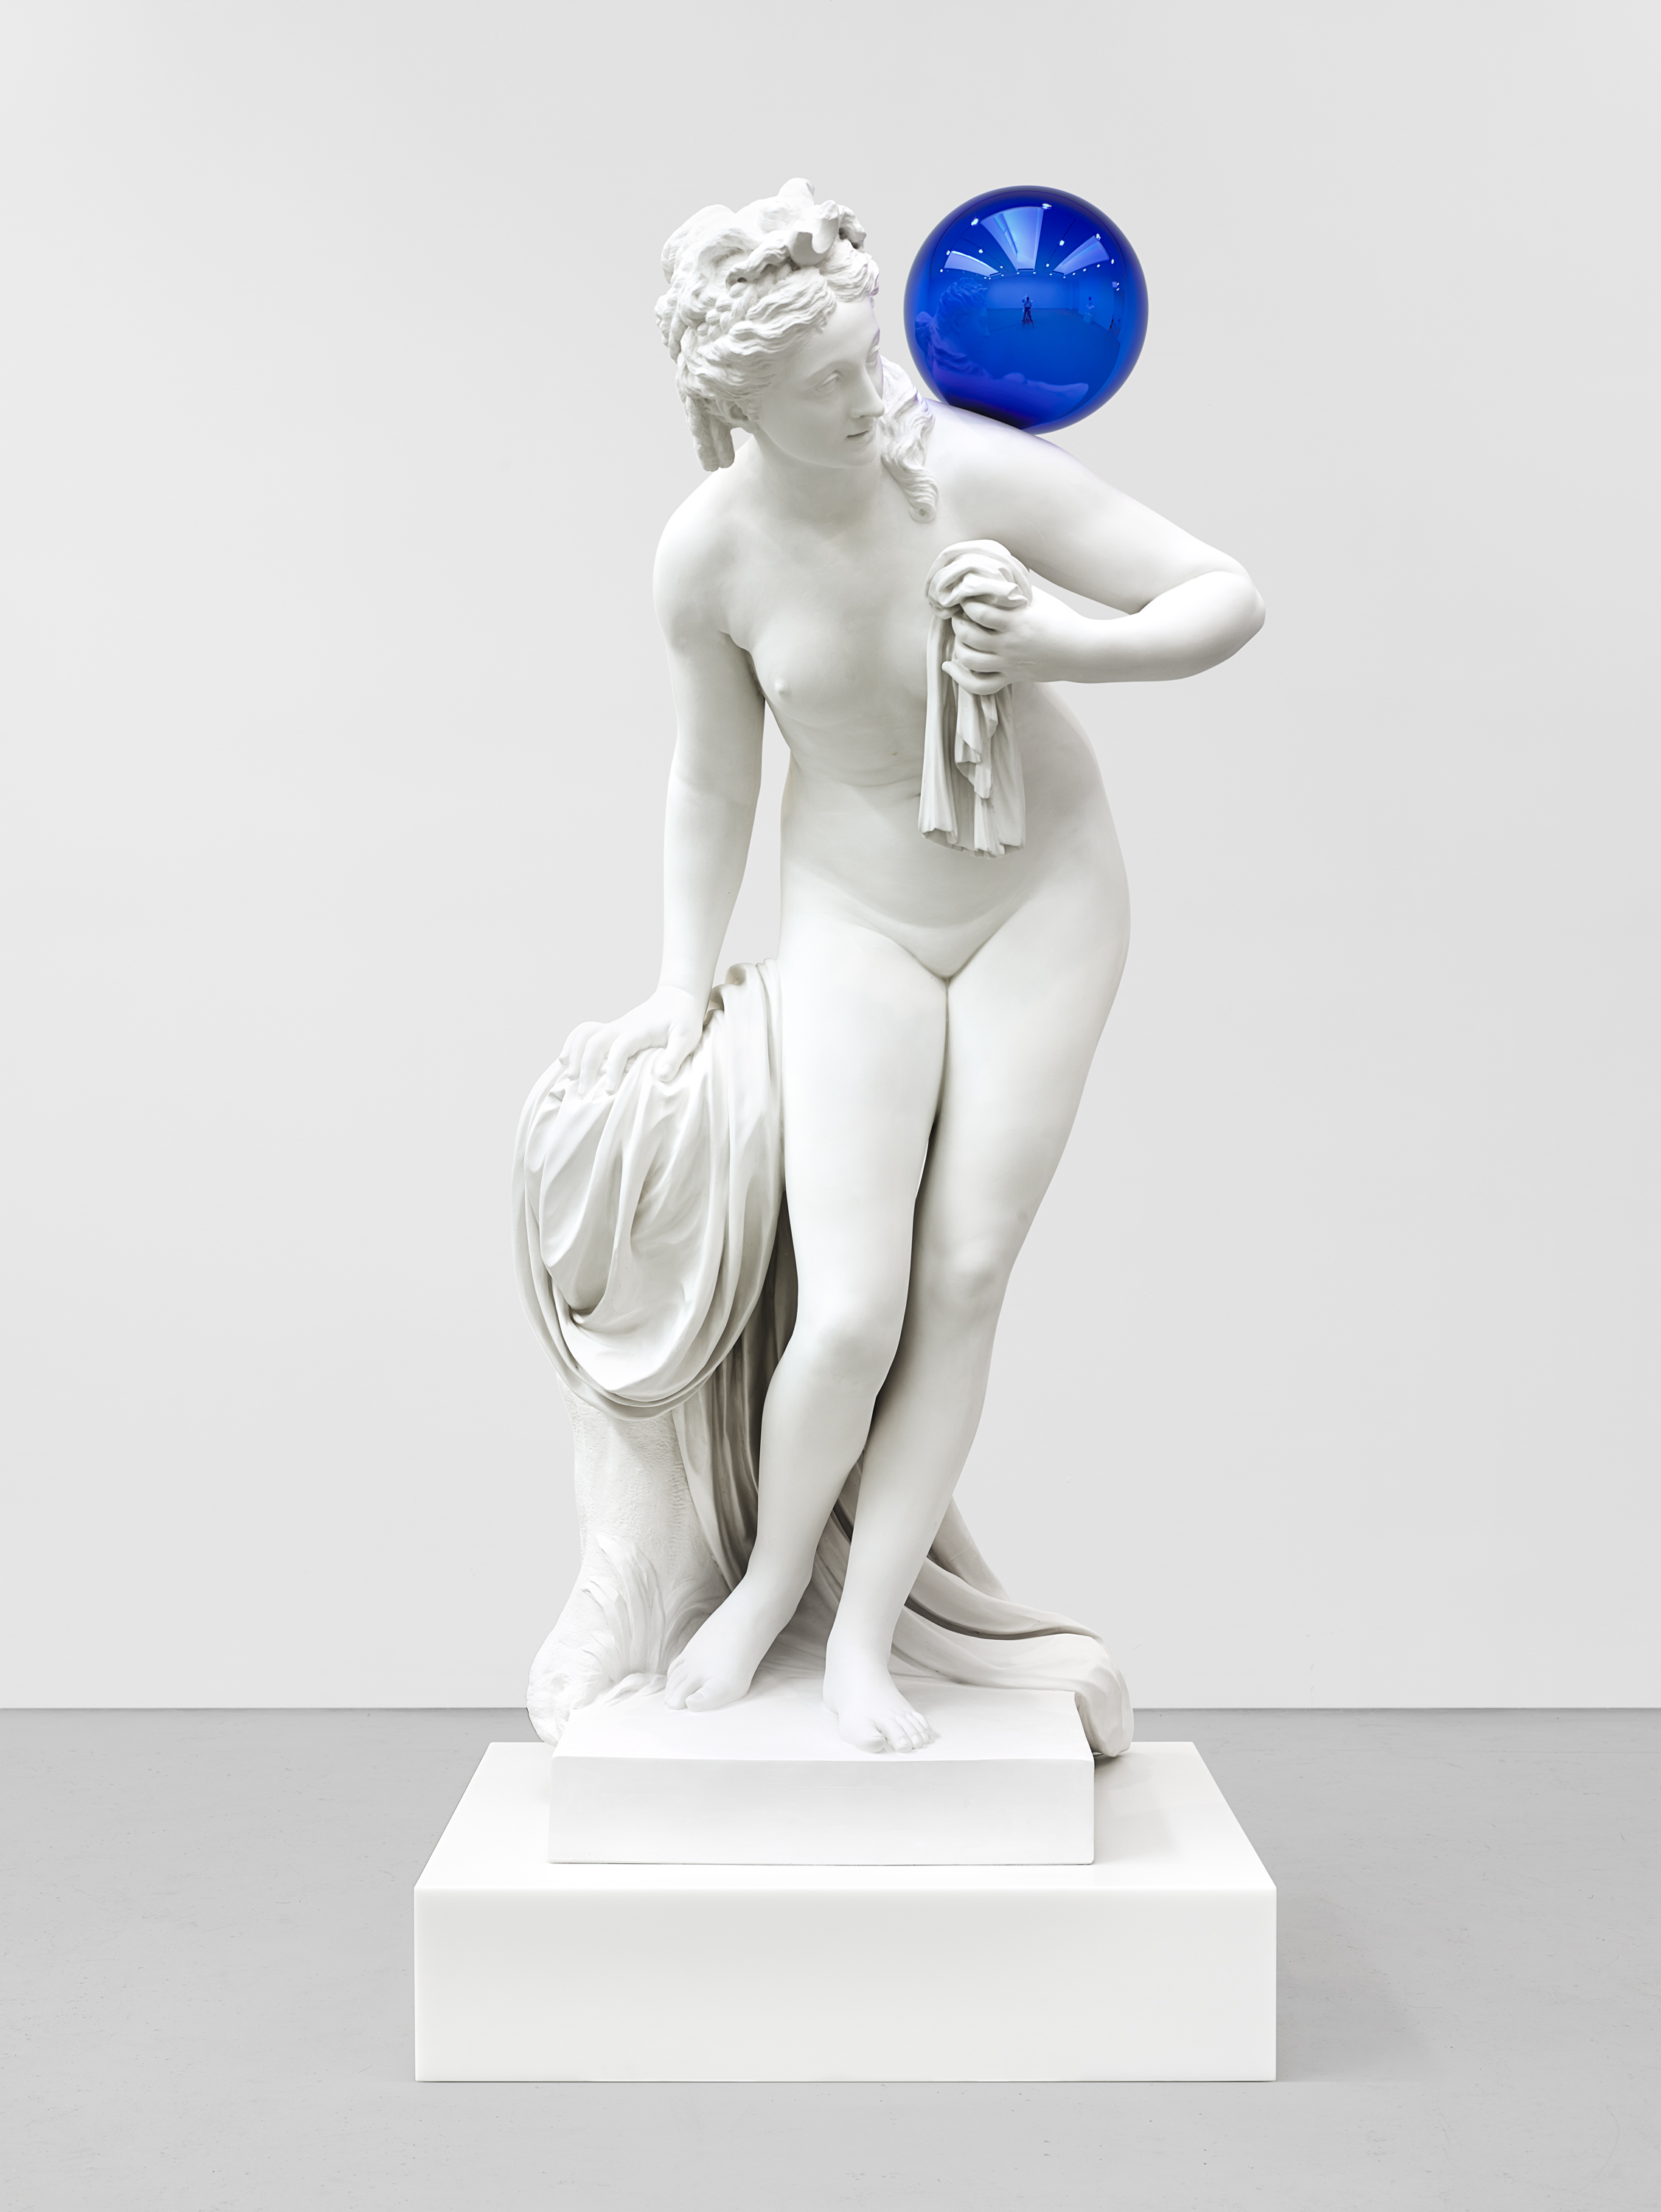 Jeff Koons, Gazing Ball (Diana), 2013. 